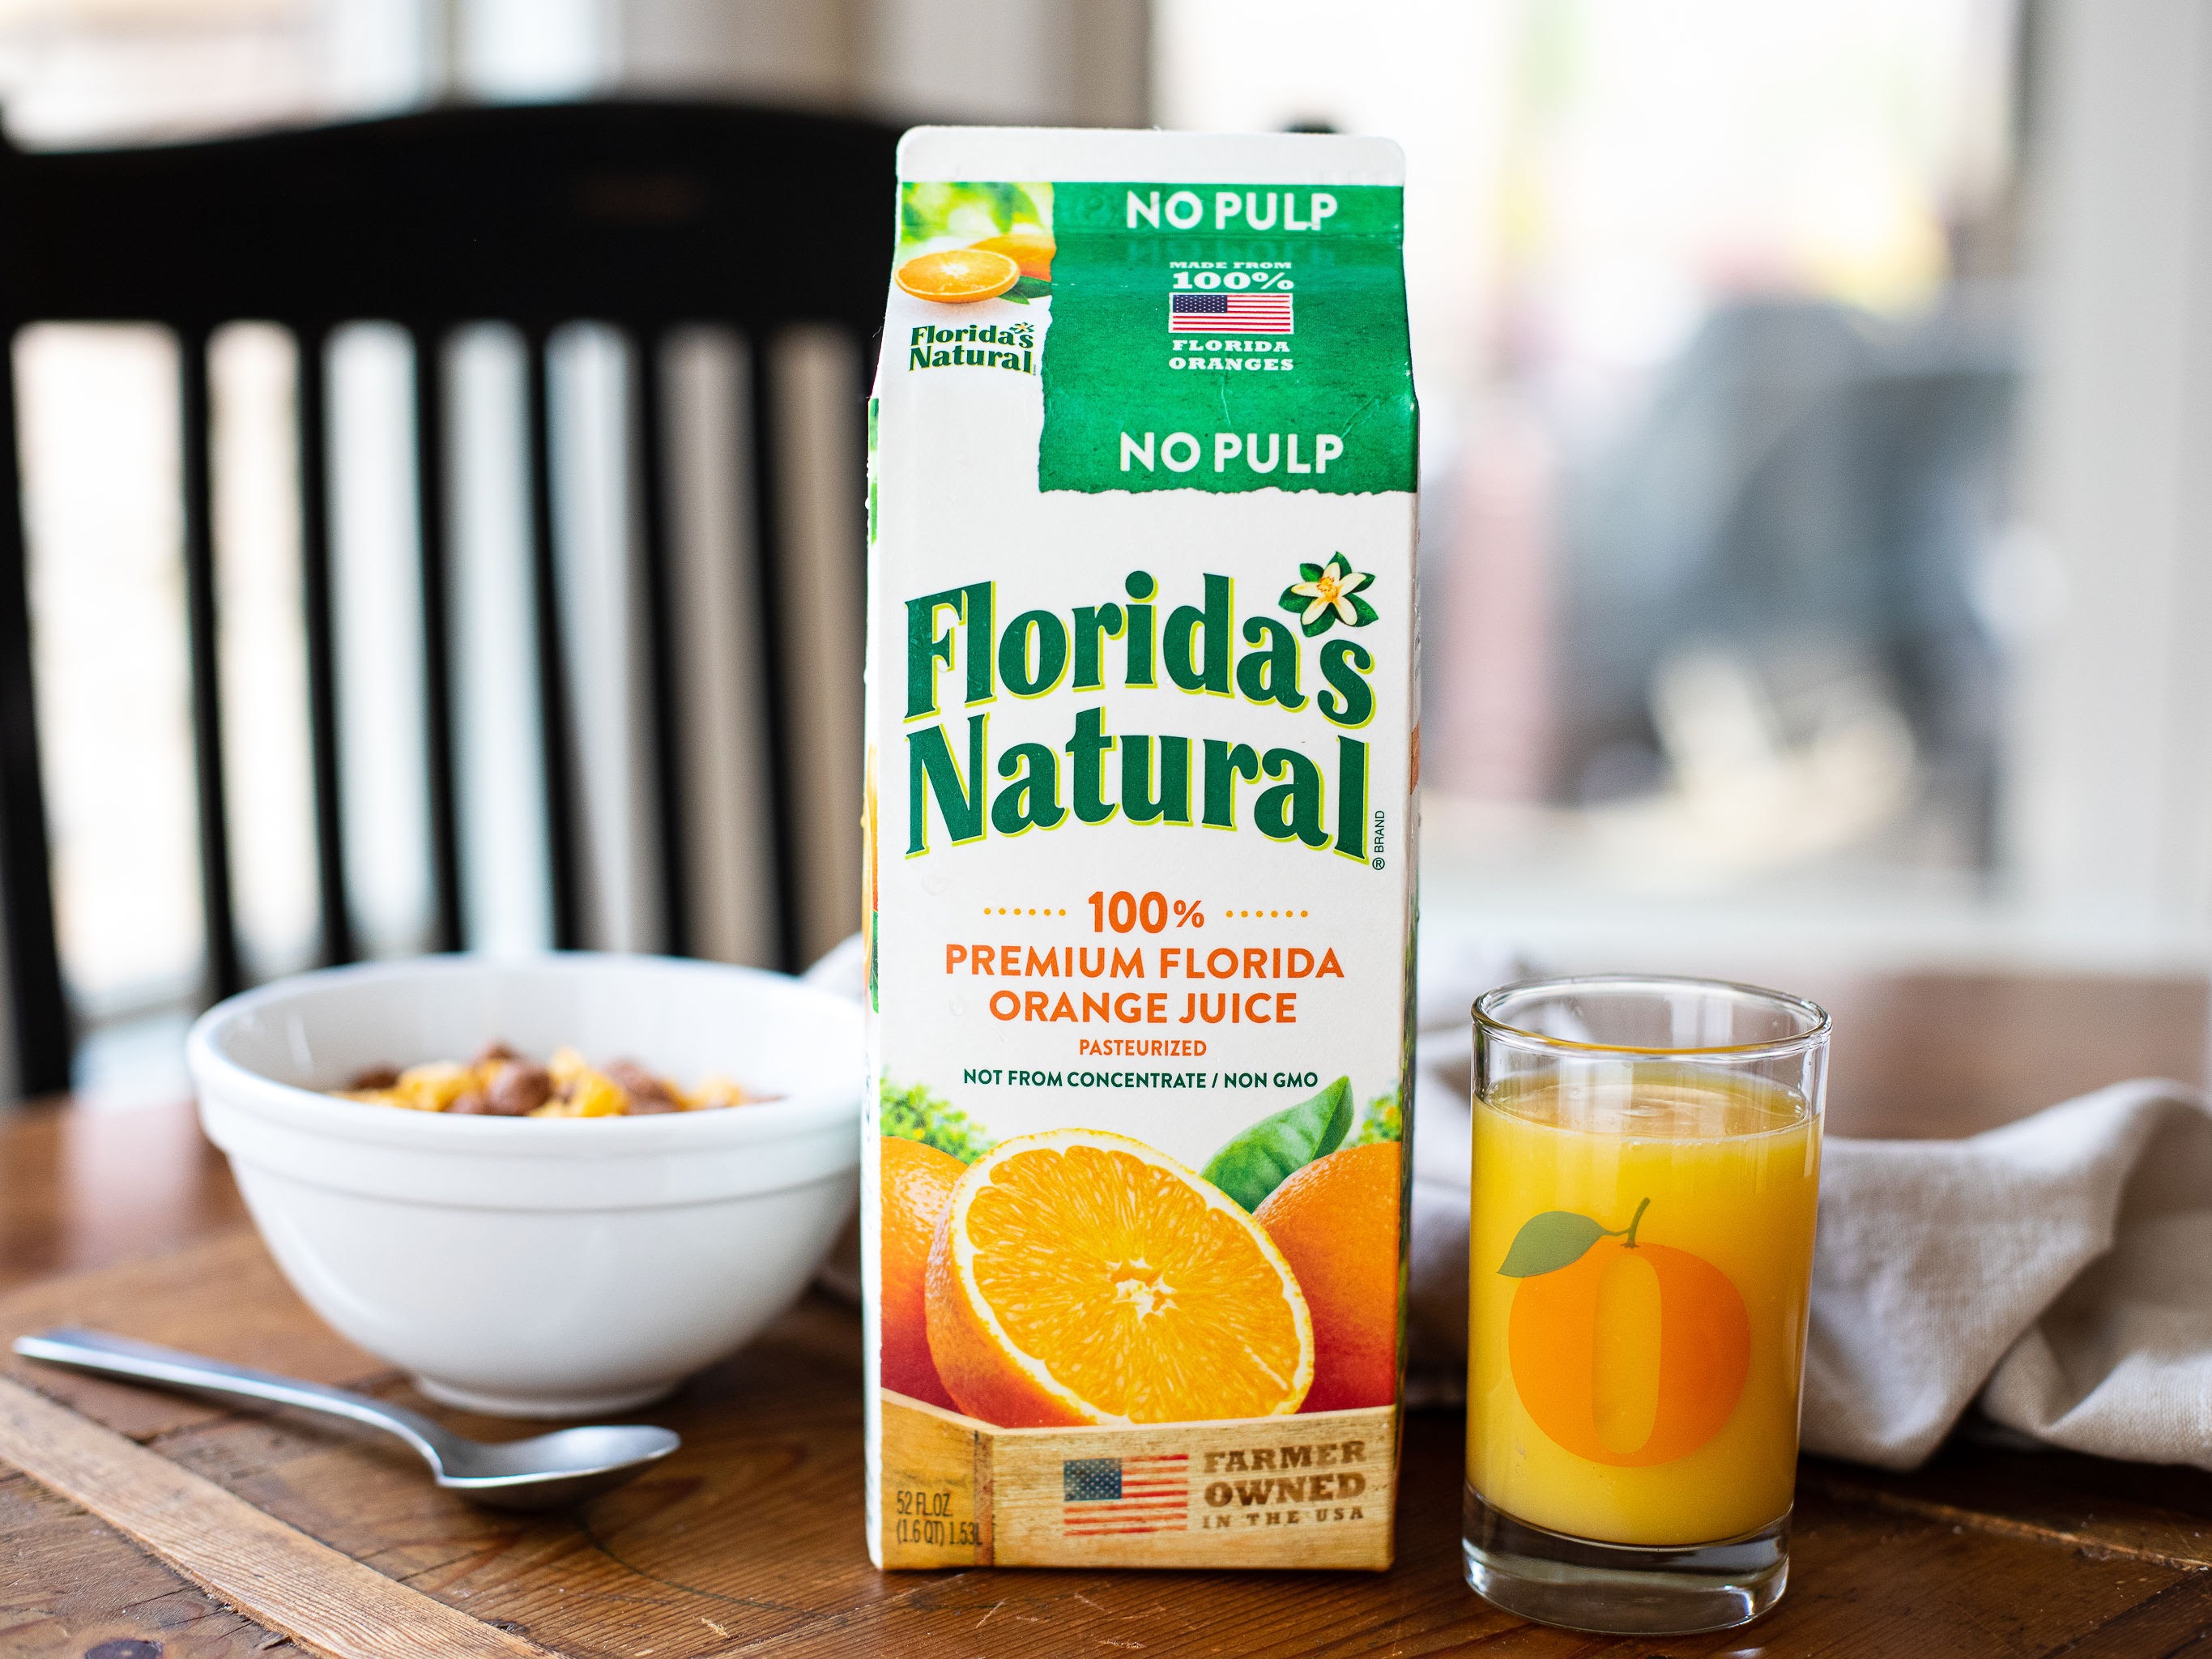 Florida’s Natural Orange Juice $2.33 At Publix